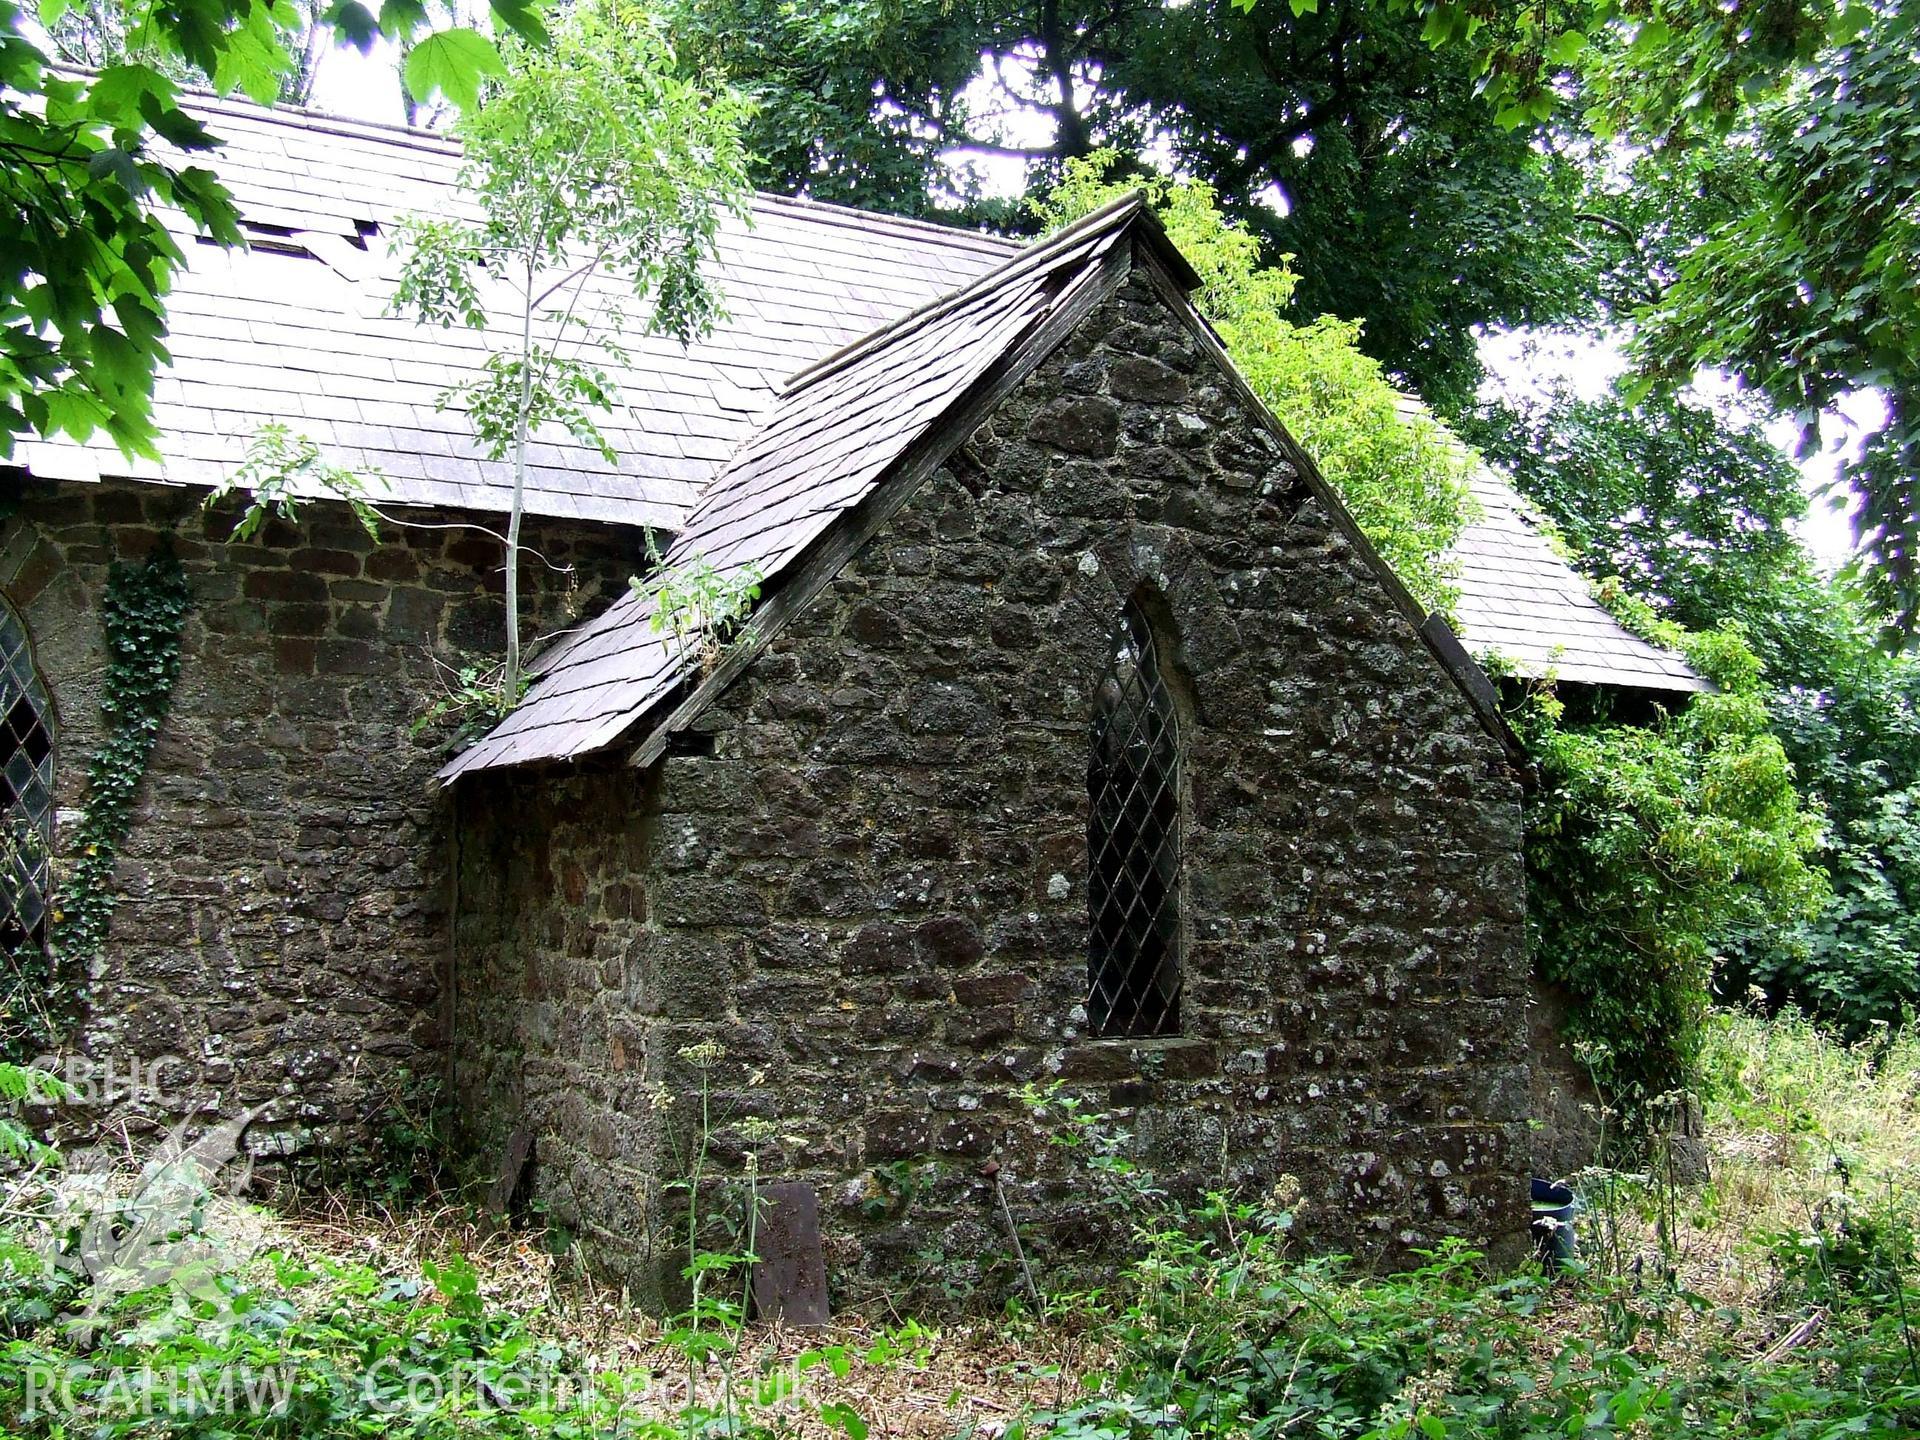 Digital colour photograph showing exterior - south transept, Castell Dwyran church.